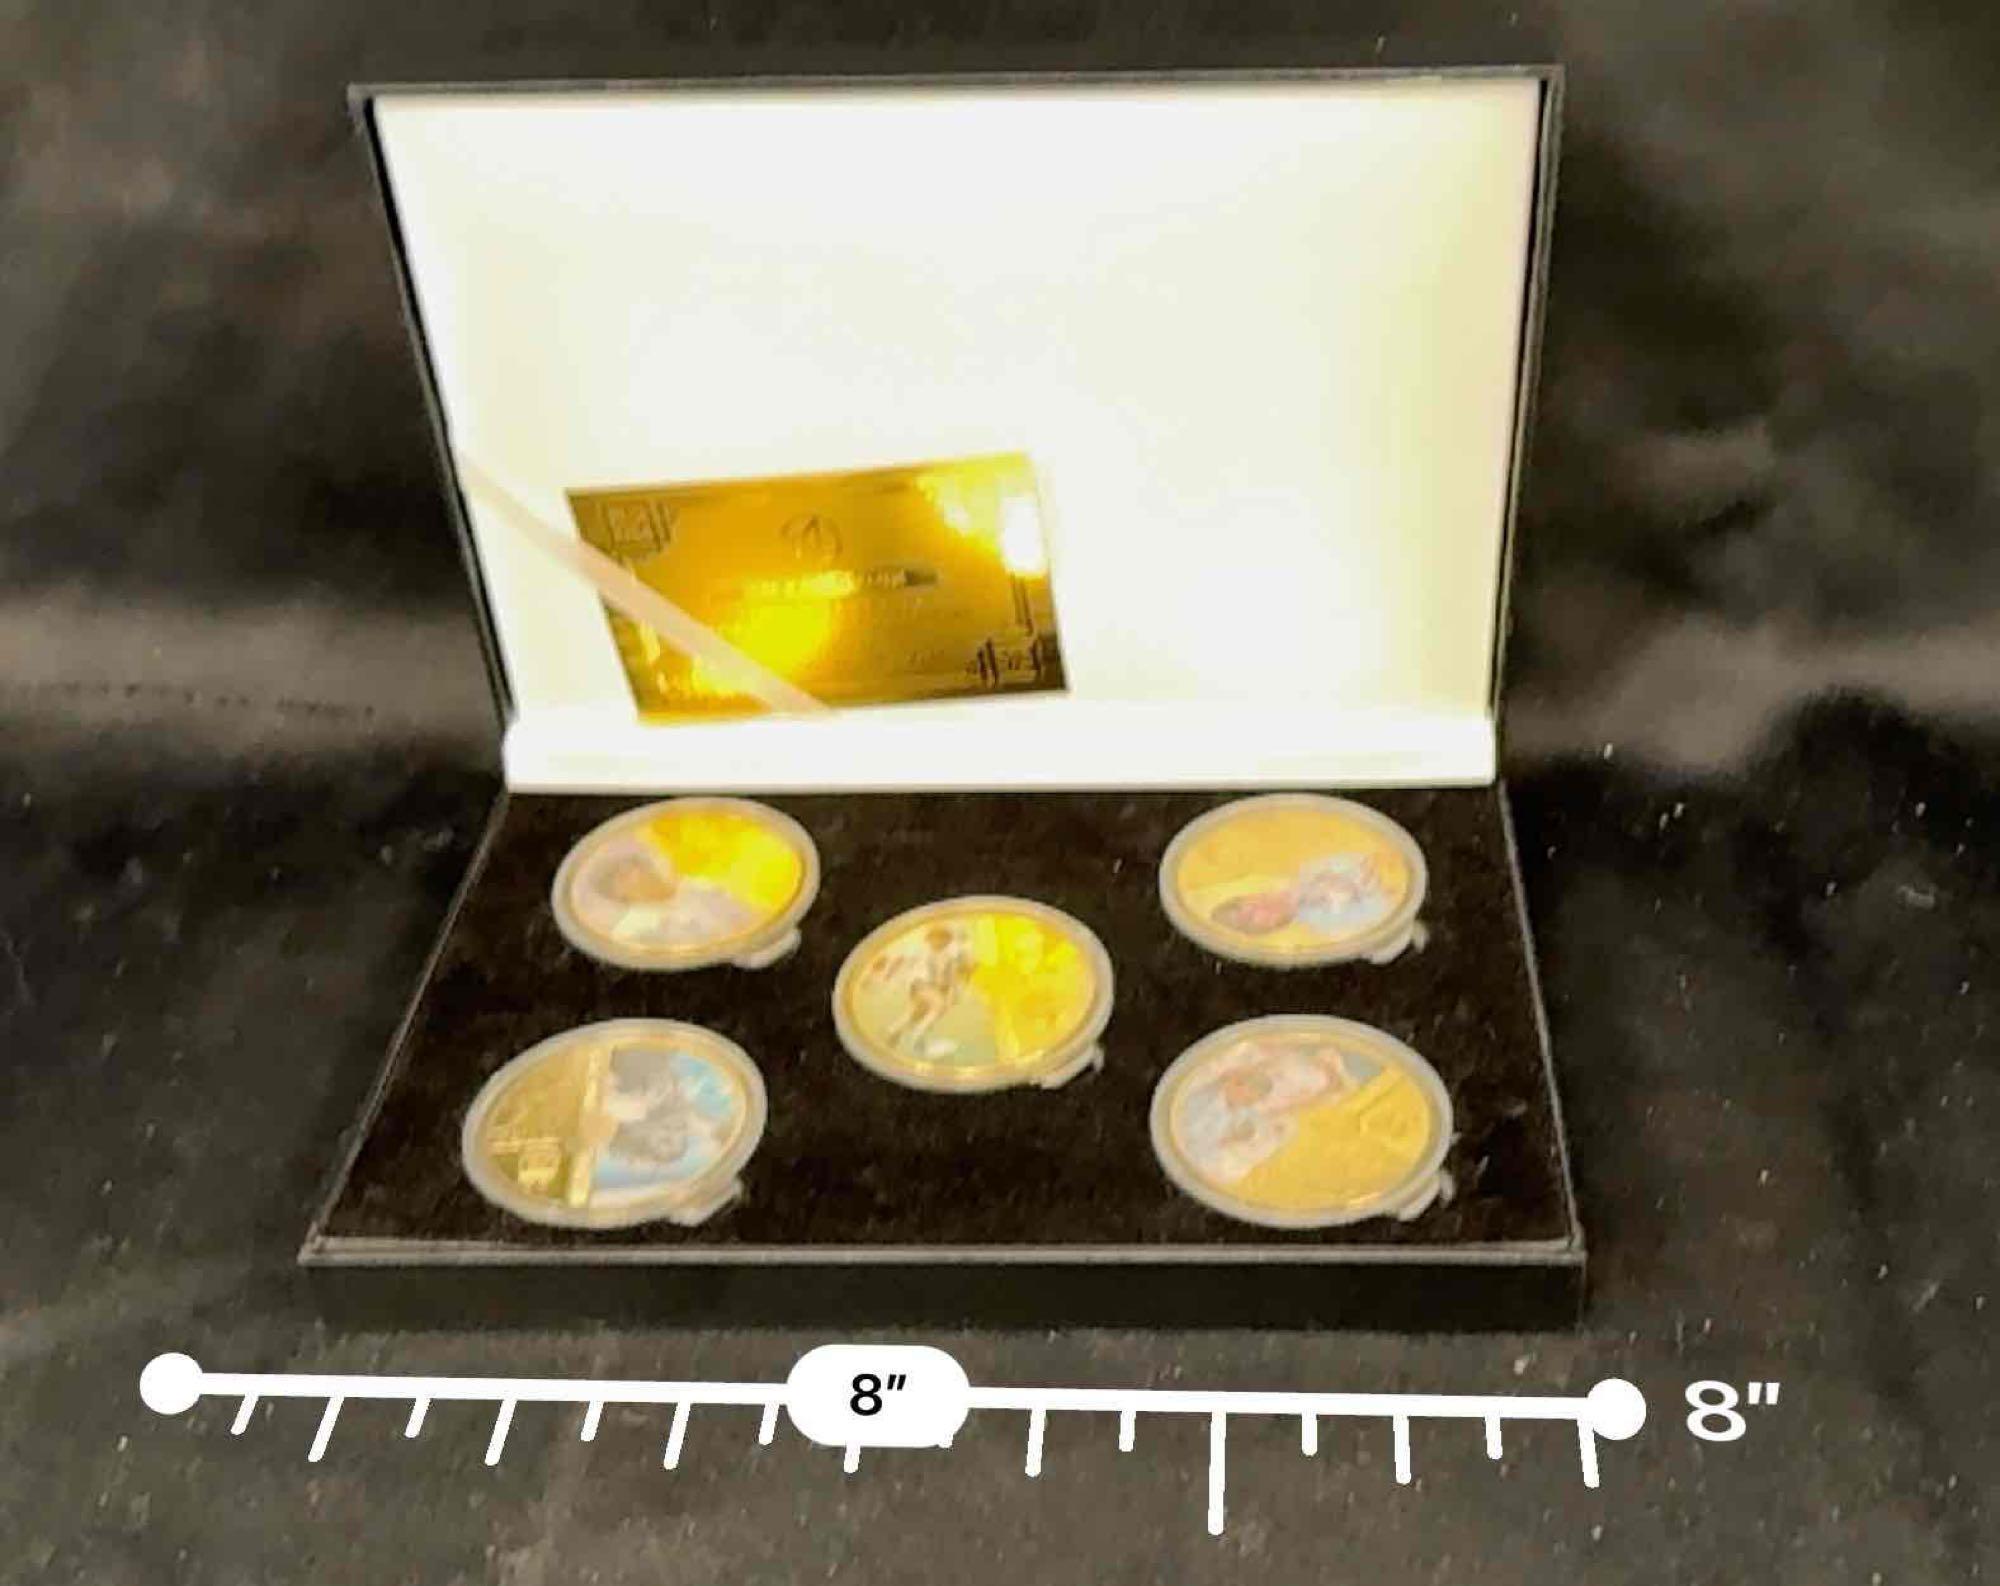 24K Gold Plated Mardona Collector Coins